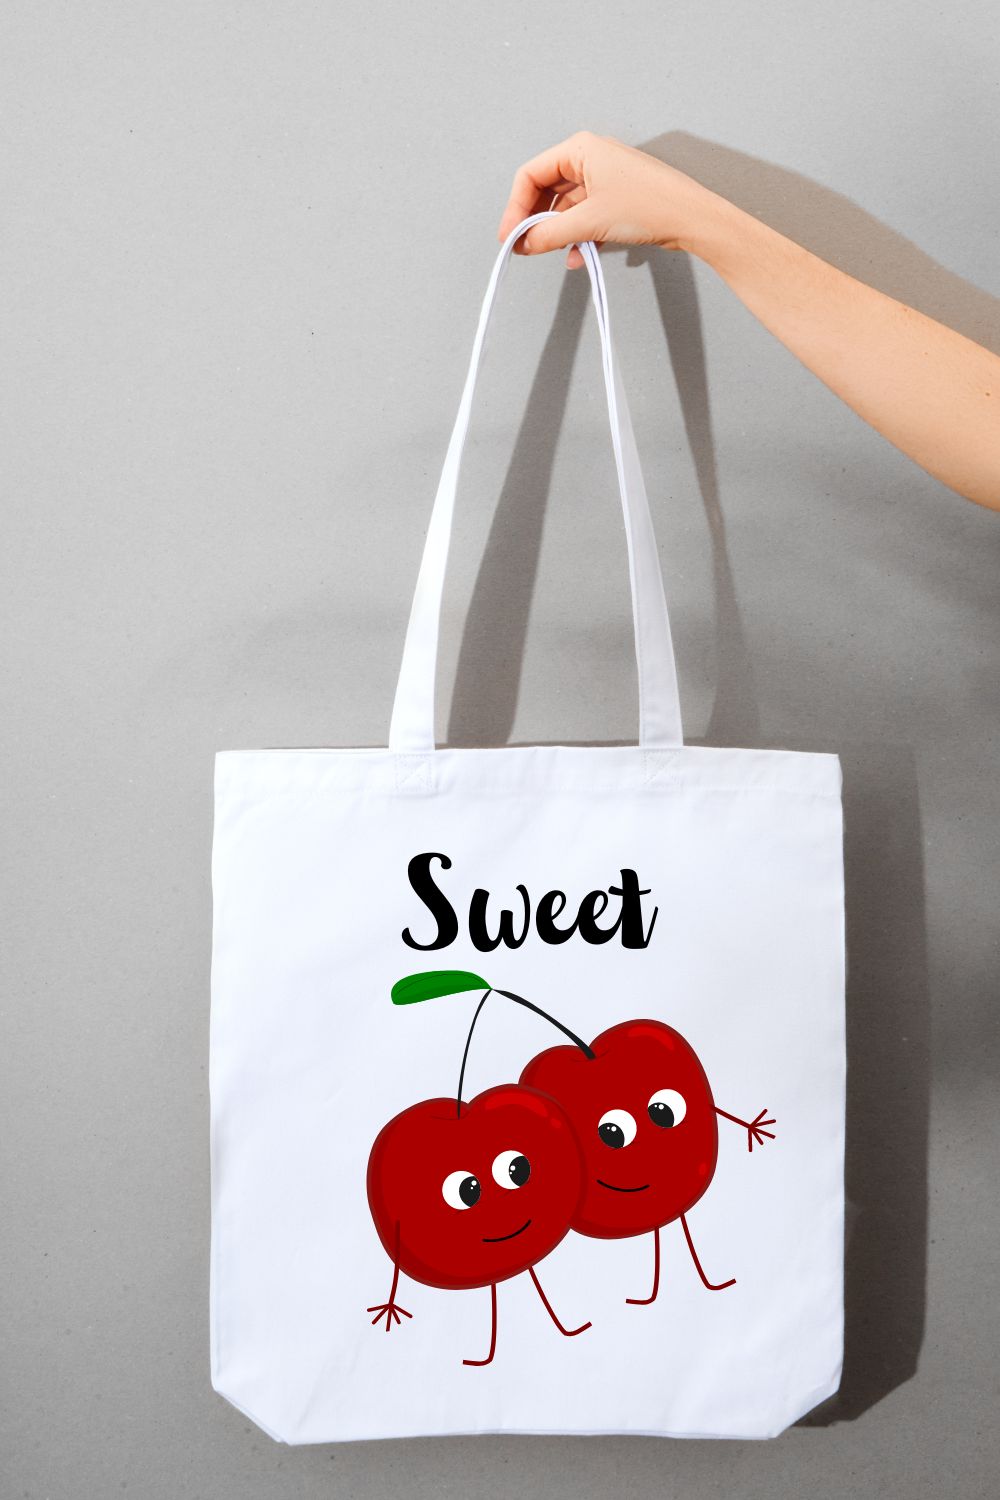 sweet cherries design pinterest preview image.